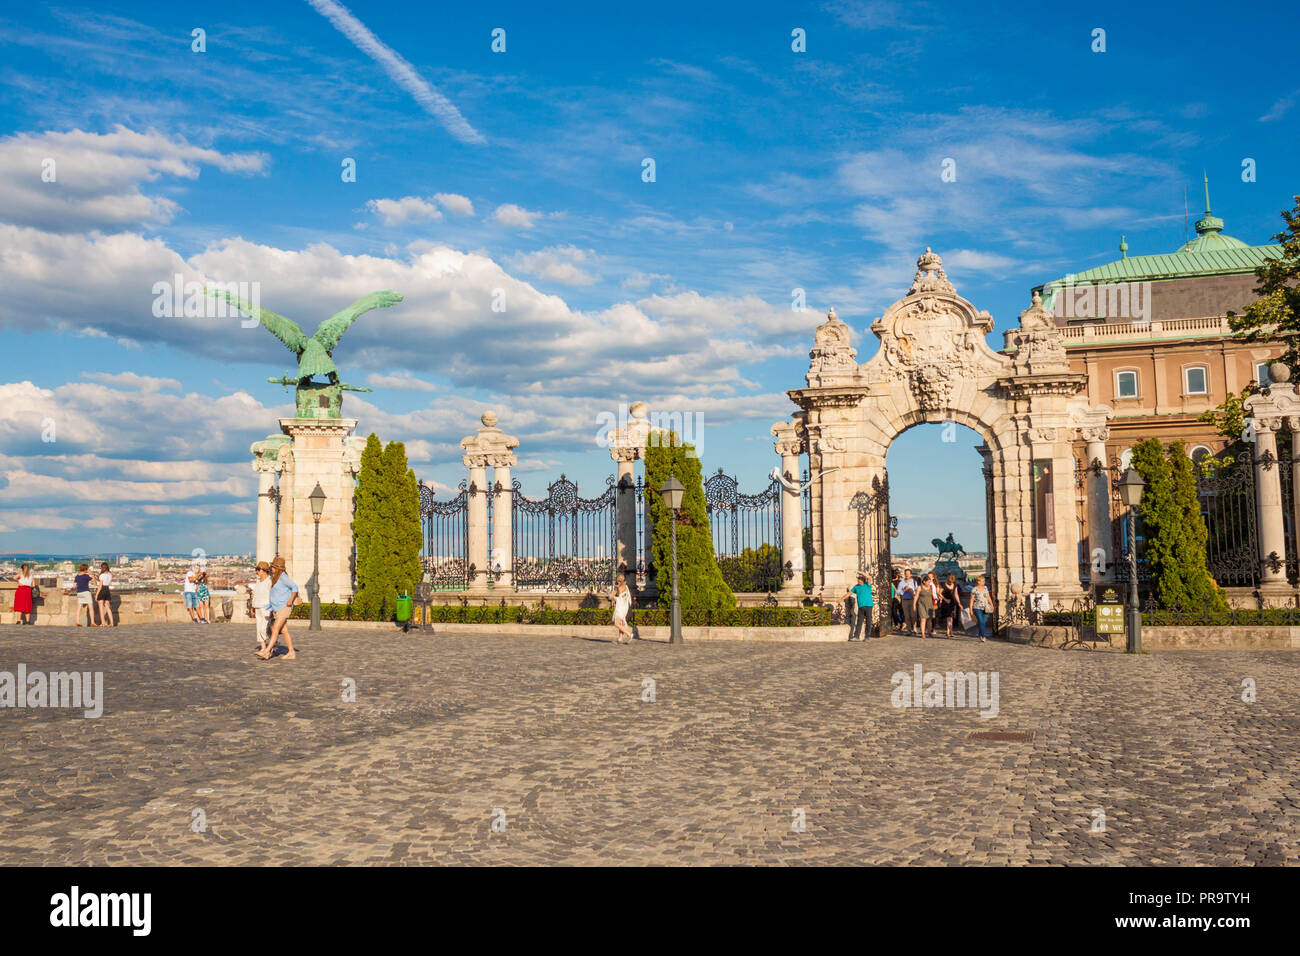 Budapest, Hungary - June 5, 2017: Turul bird statue and Buda castle (Royal palace) entrance gates on the Castle hill. Stock Photo